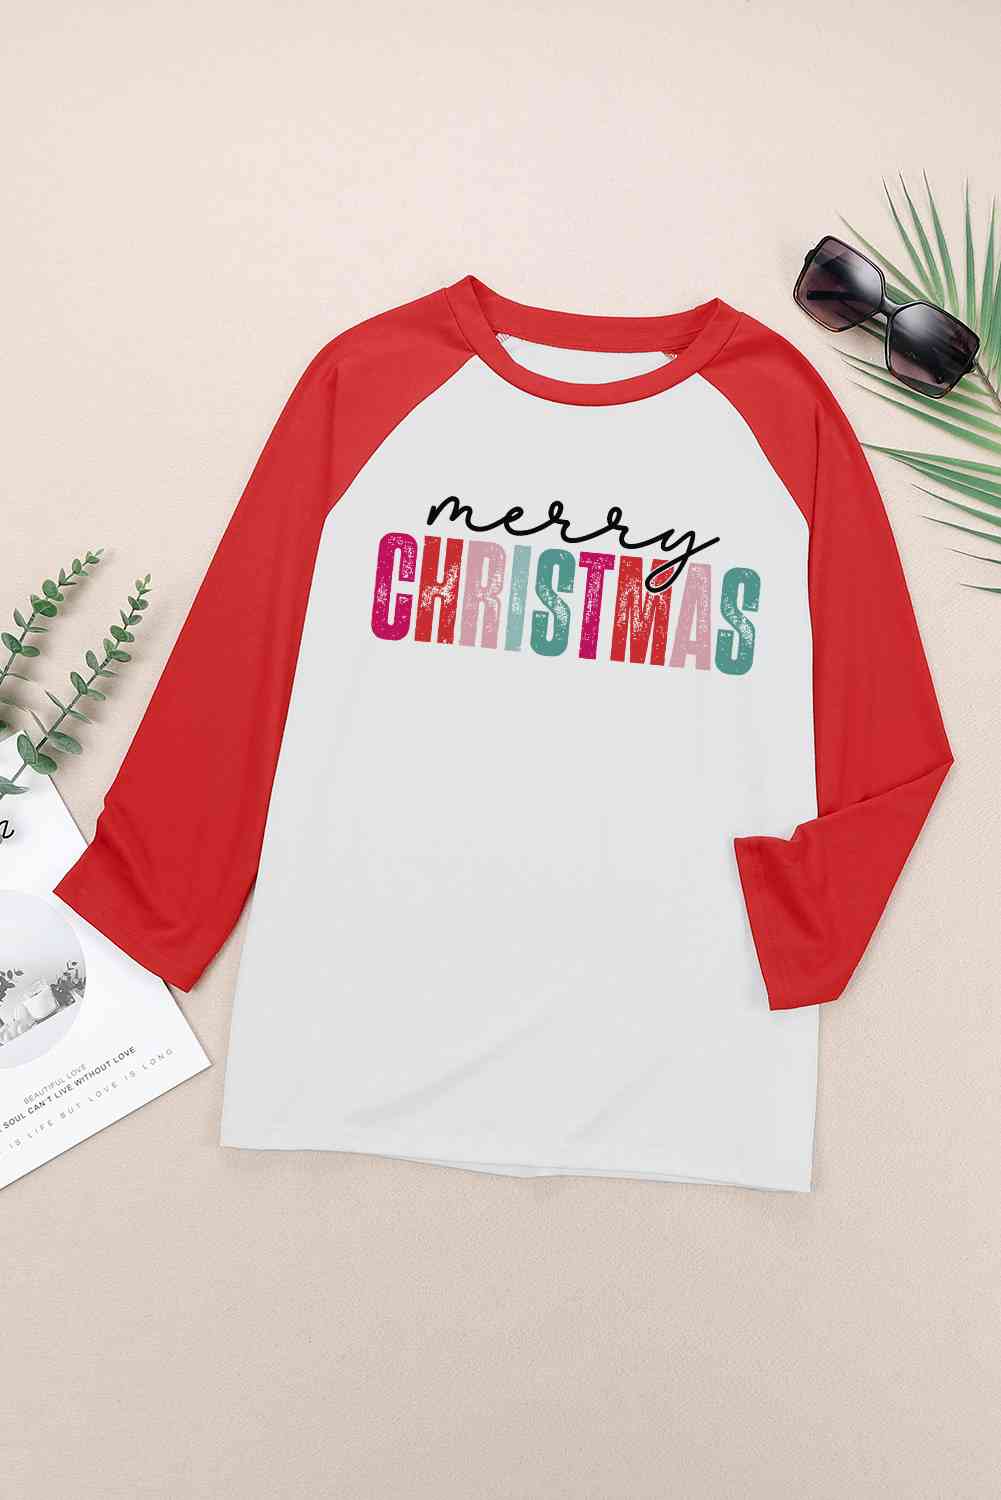 MERRY CHRISTMAS Graphic Raglan Sleeve T-Shirt - Guy Christopher